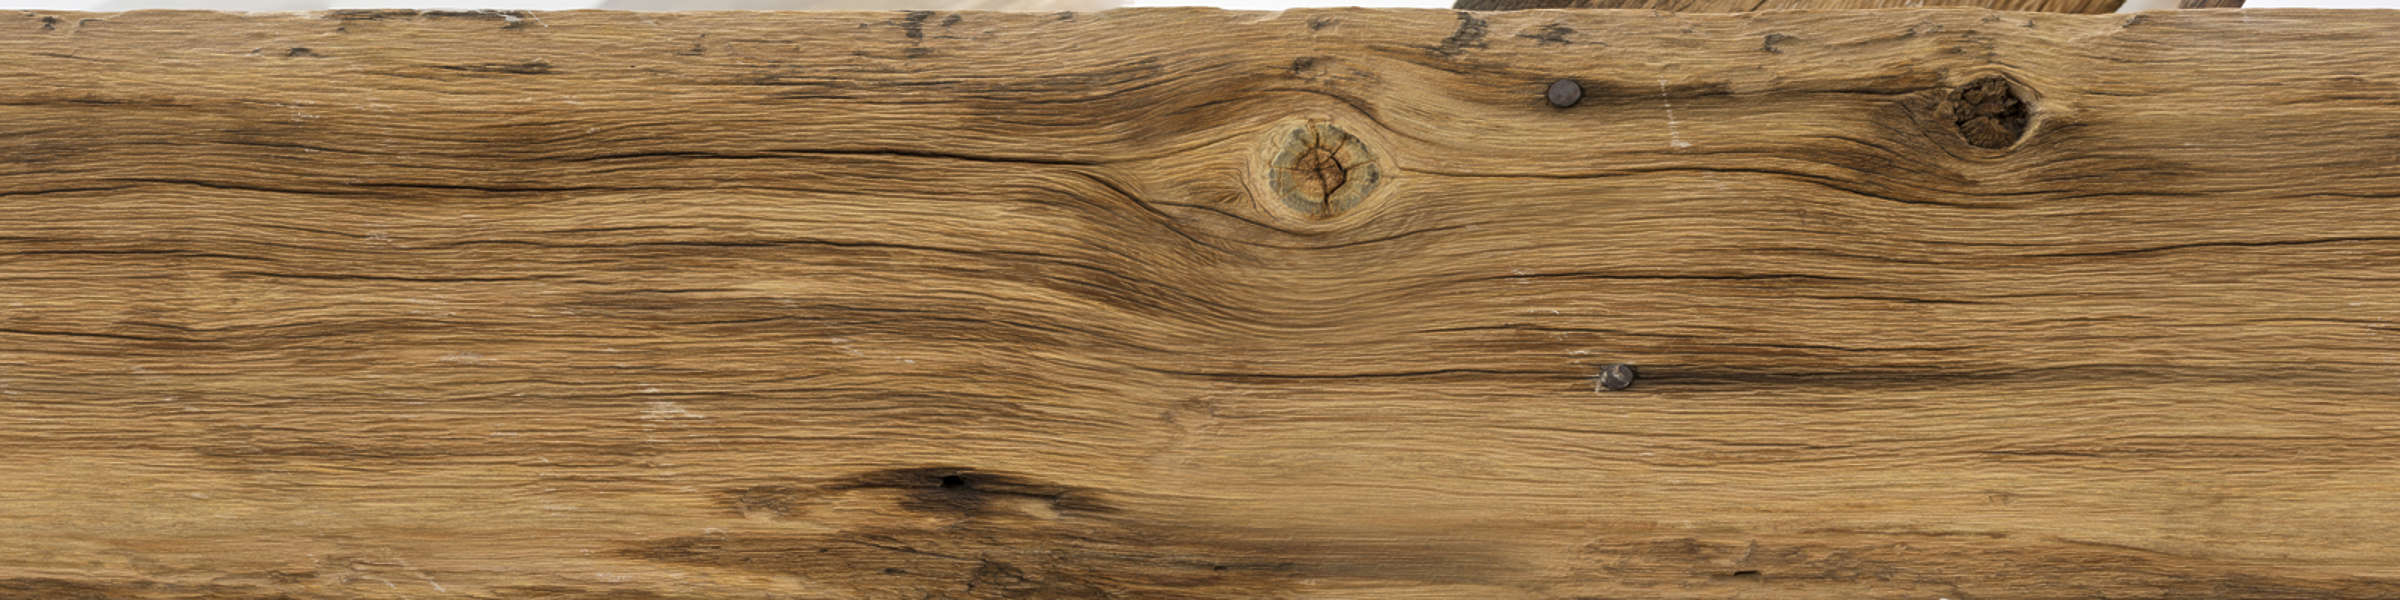 wood beam raw texture bare textures wooden western desert ghost